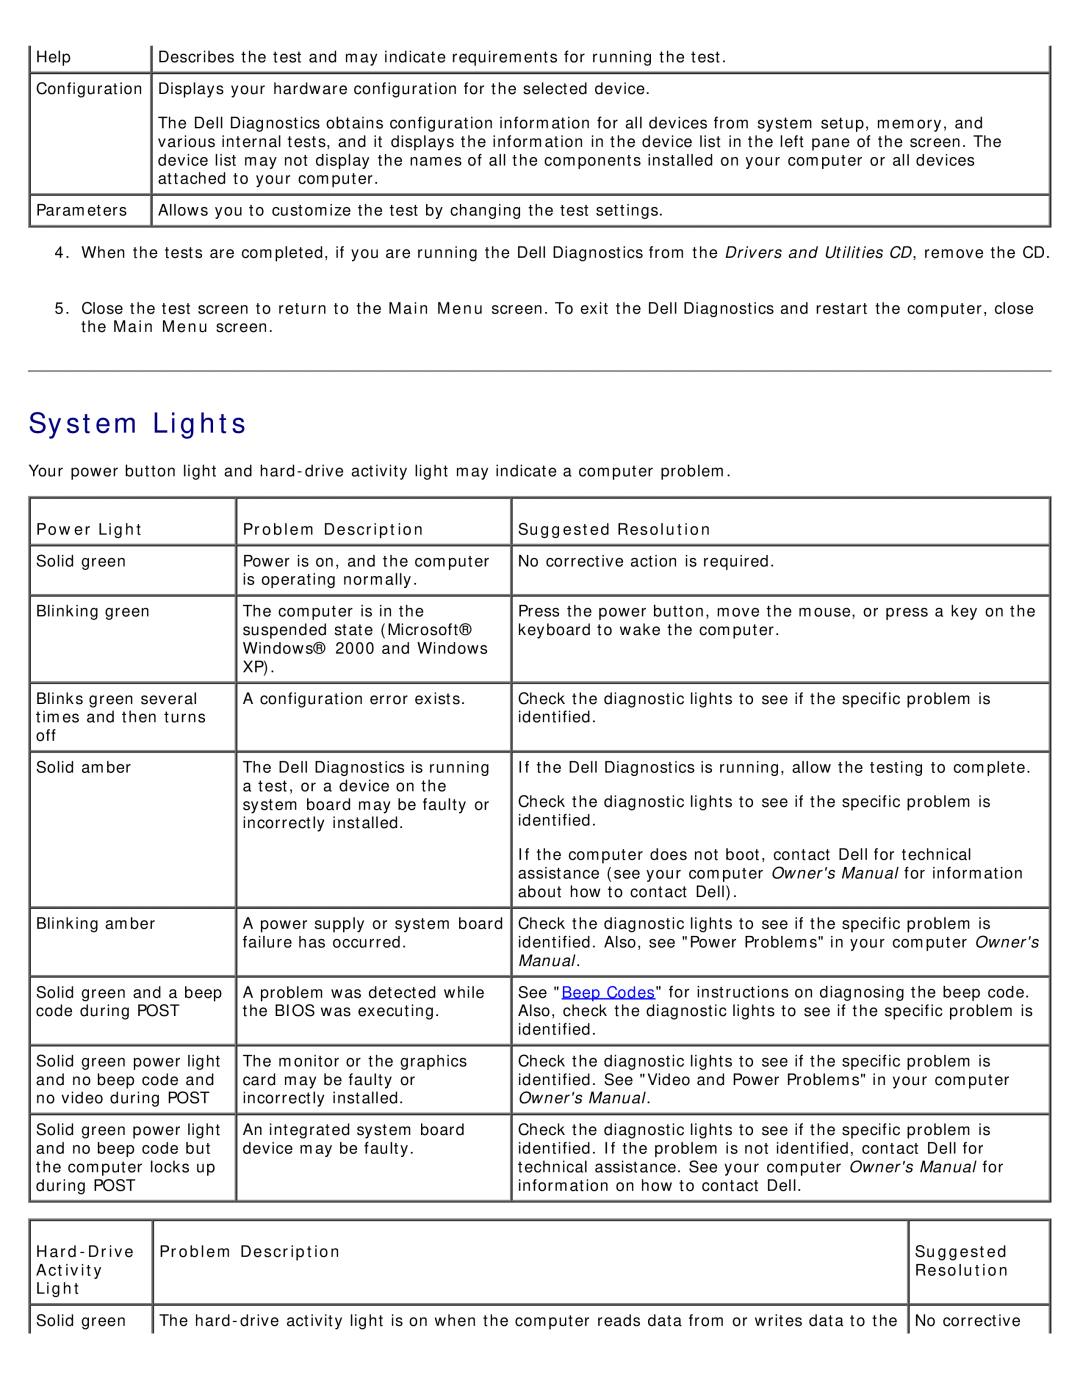 Dell DCSM manual System Lights, Power Light, Problem Description, Suggested Resolution 